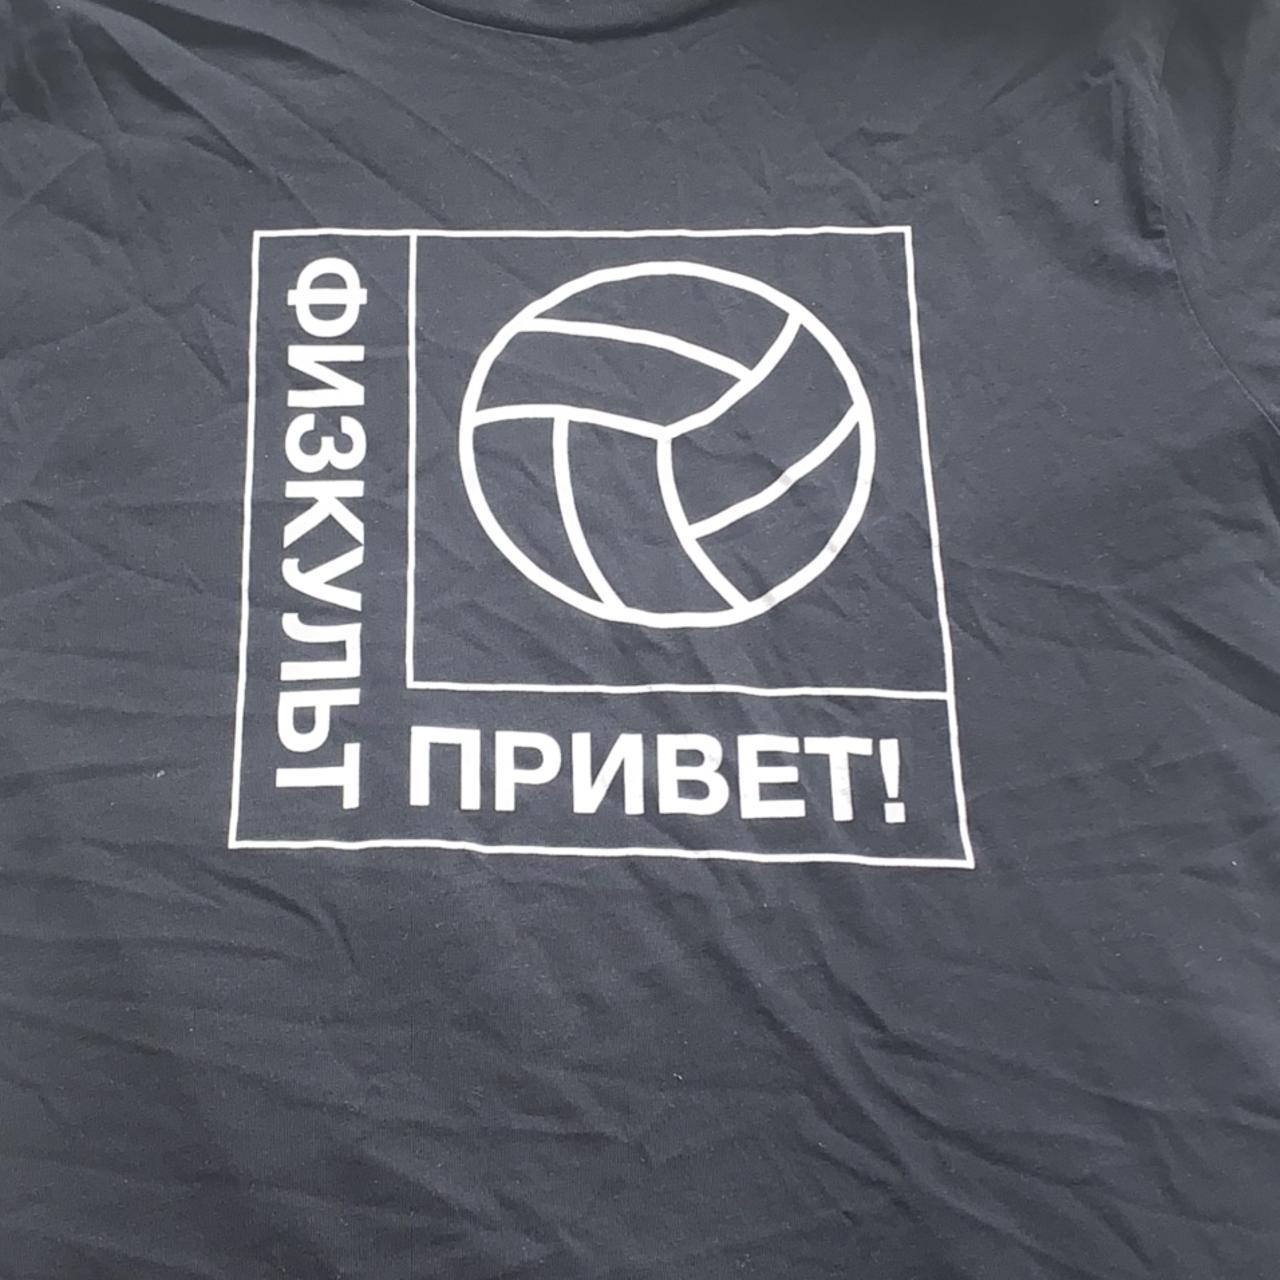 Gosha Rubchinskiy Men's Black and White T-shirt (2)